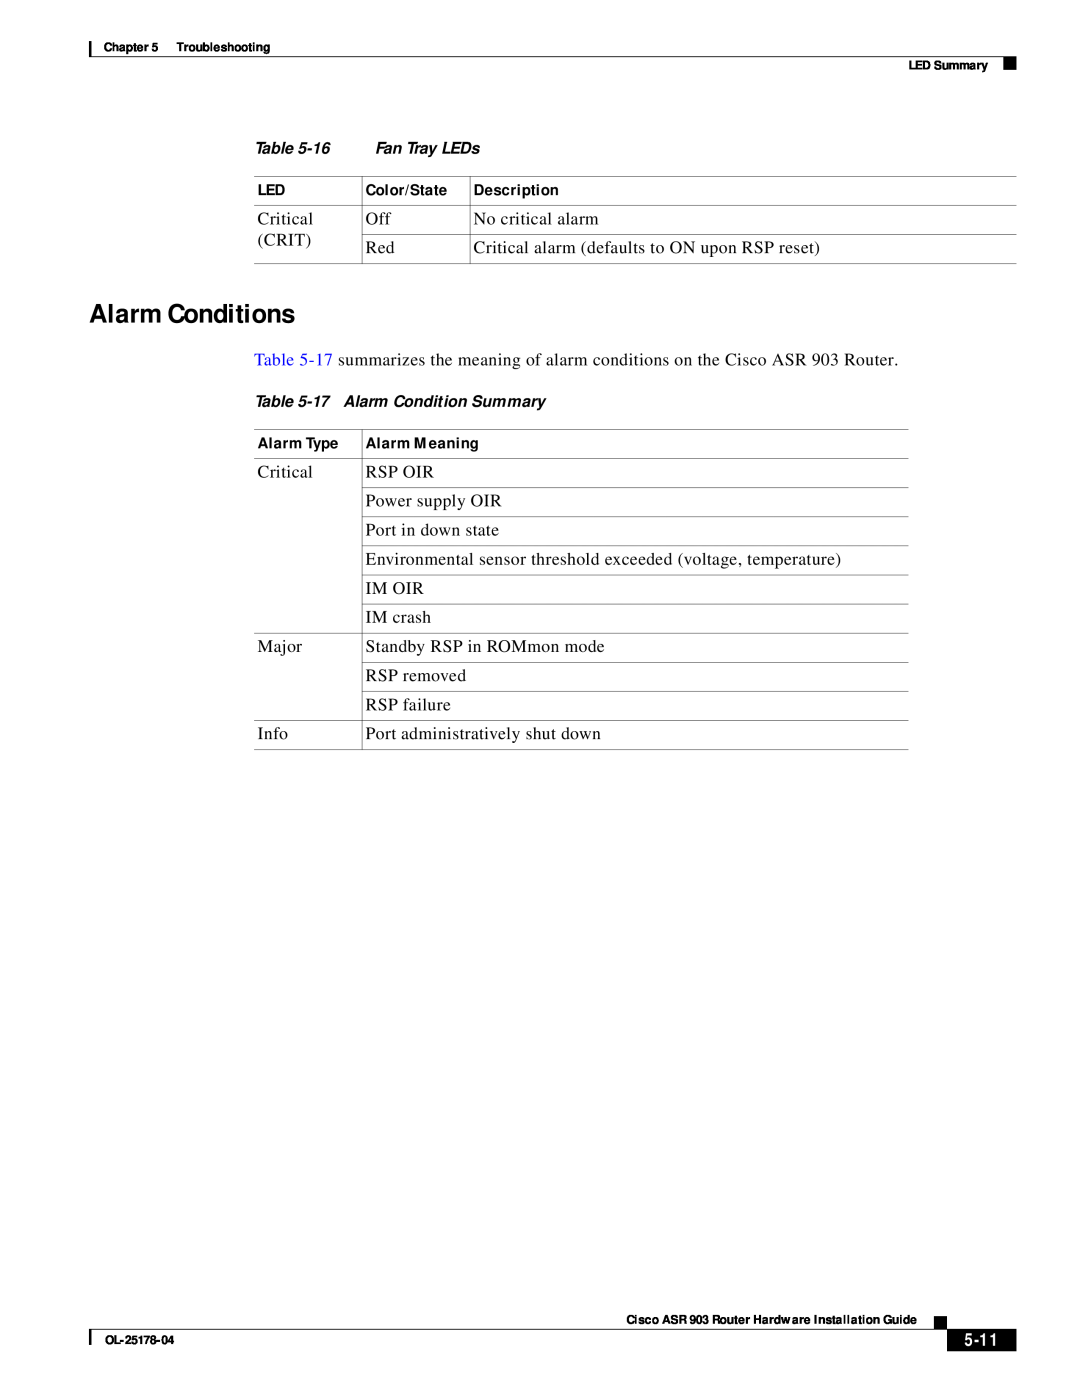 Cisco Systems ASR 903 manual Alarm Conditions, 5-11, Color/State, Description, Alarm Type, Alarm Meaning 